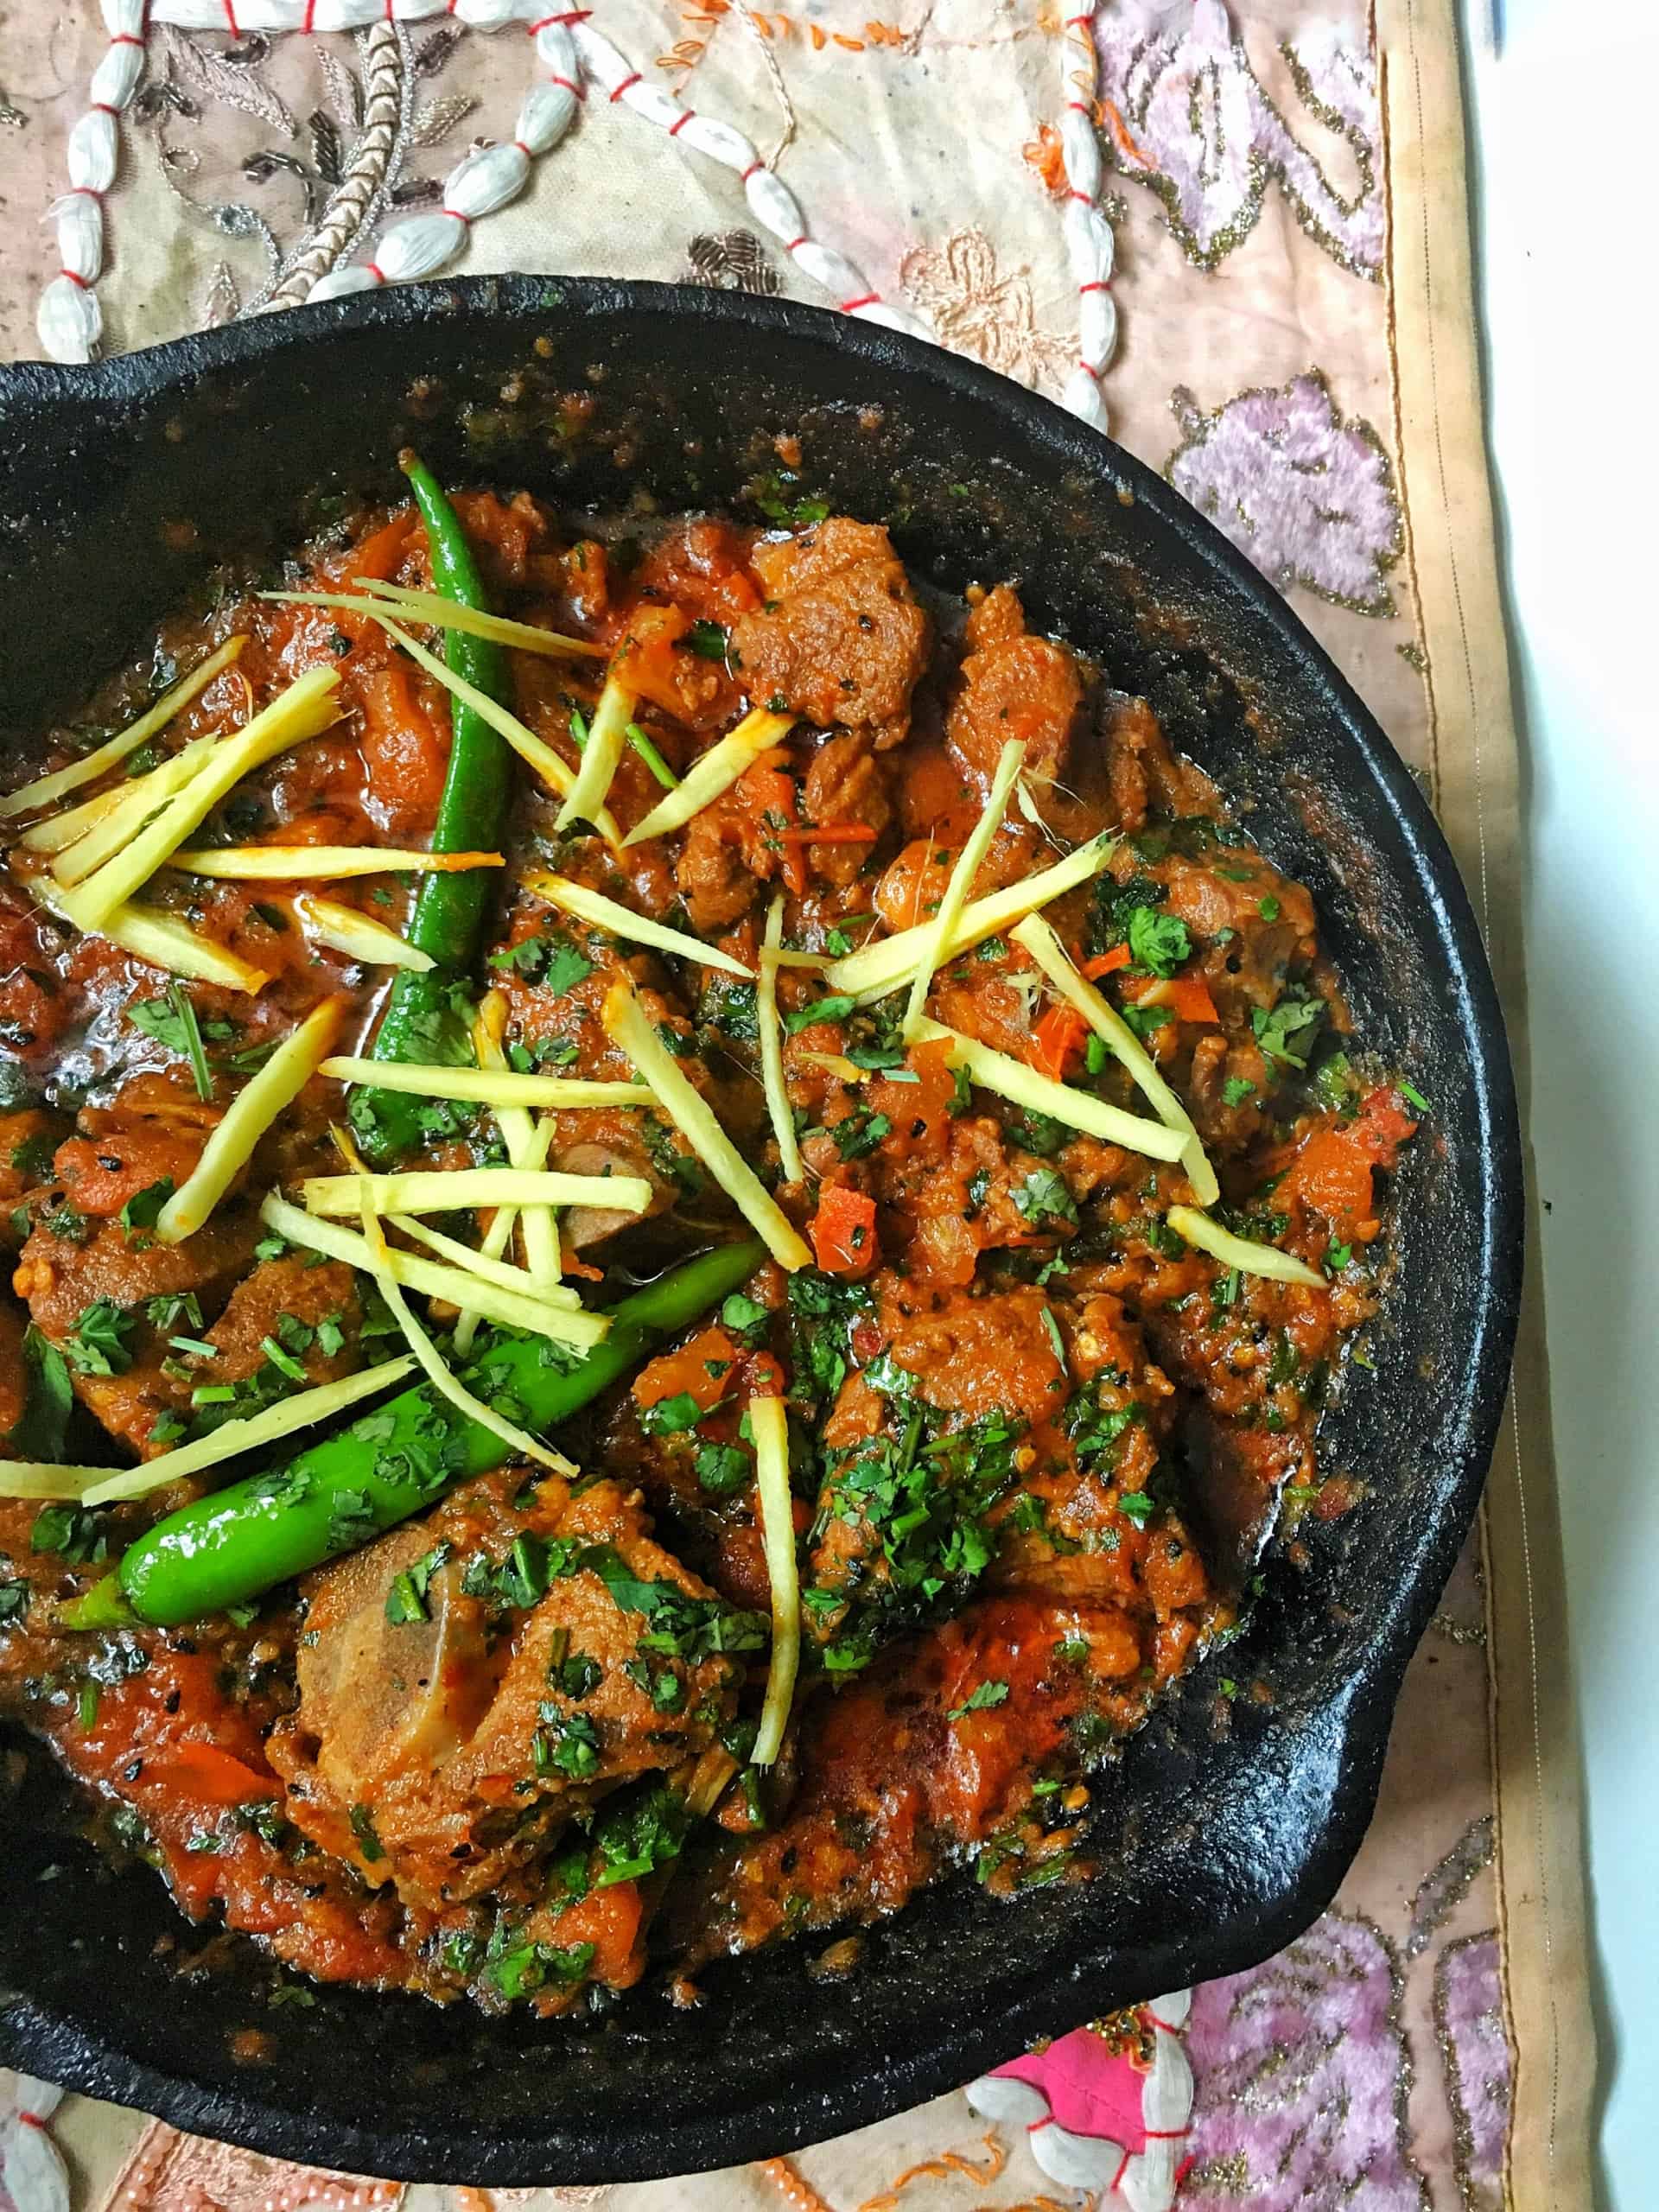 Lamb / Mutton Karahi - An Easy, Traditional Recipe